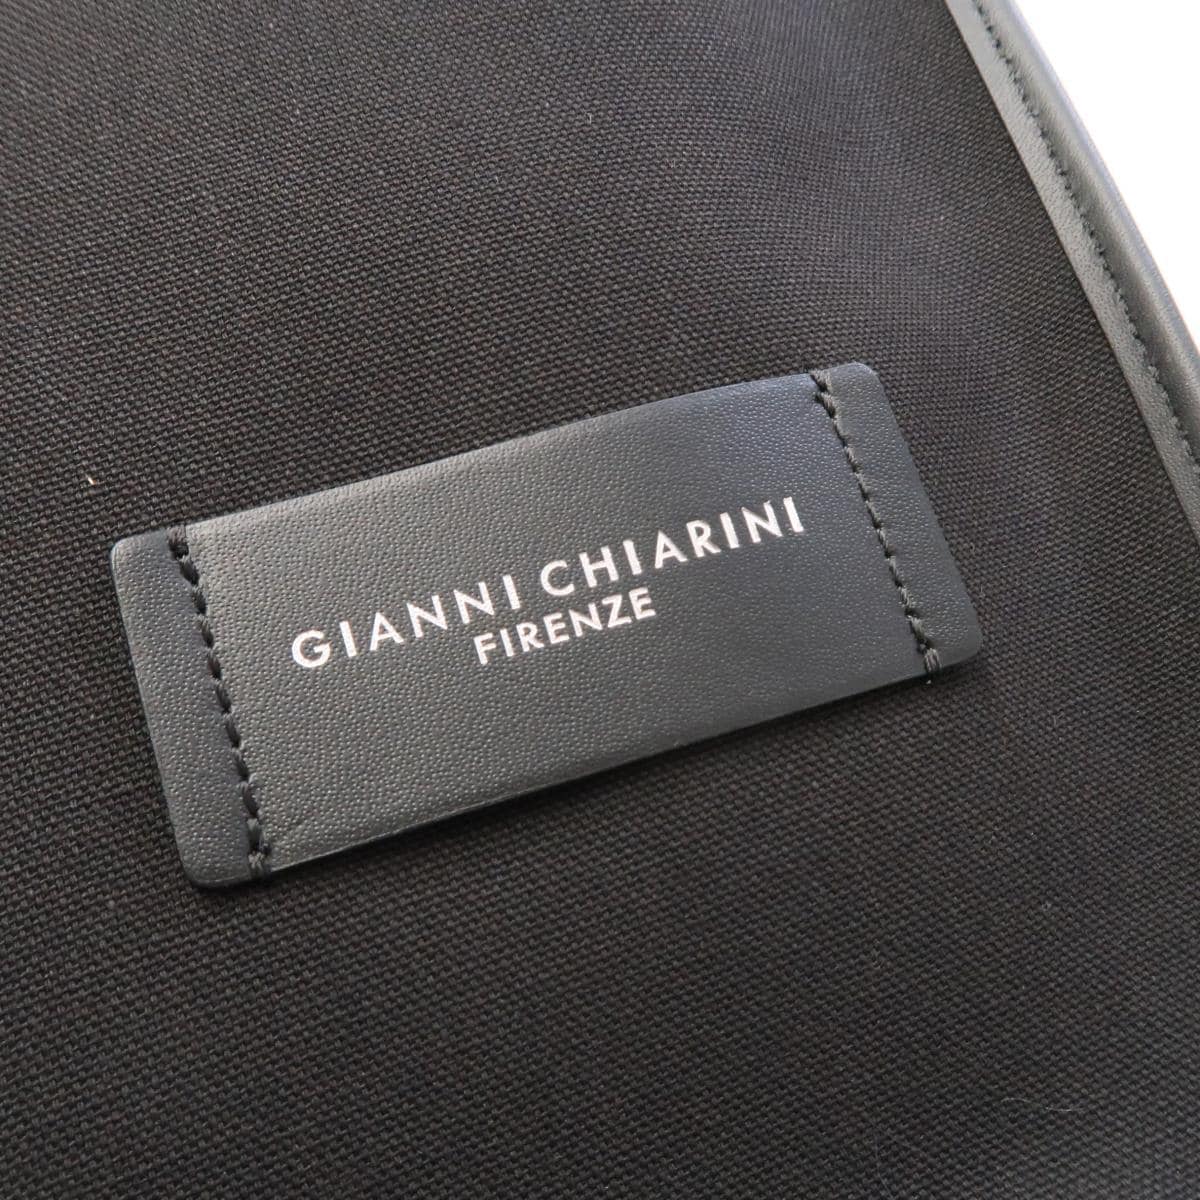 [BRAND NEW] Gianni Chiarini Bag 6850